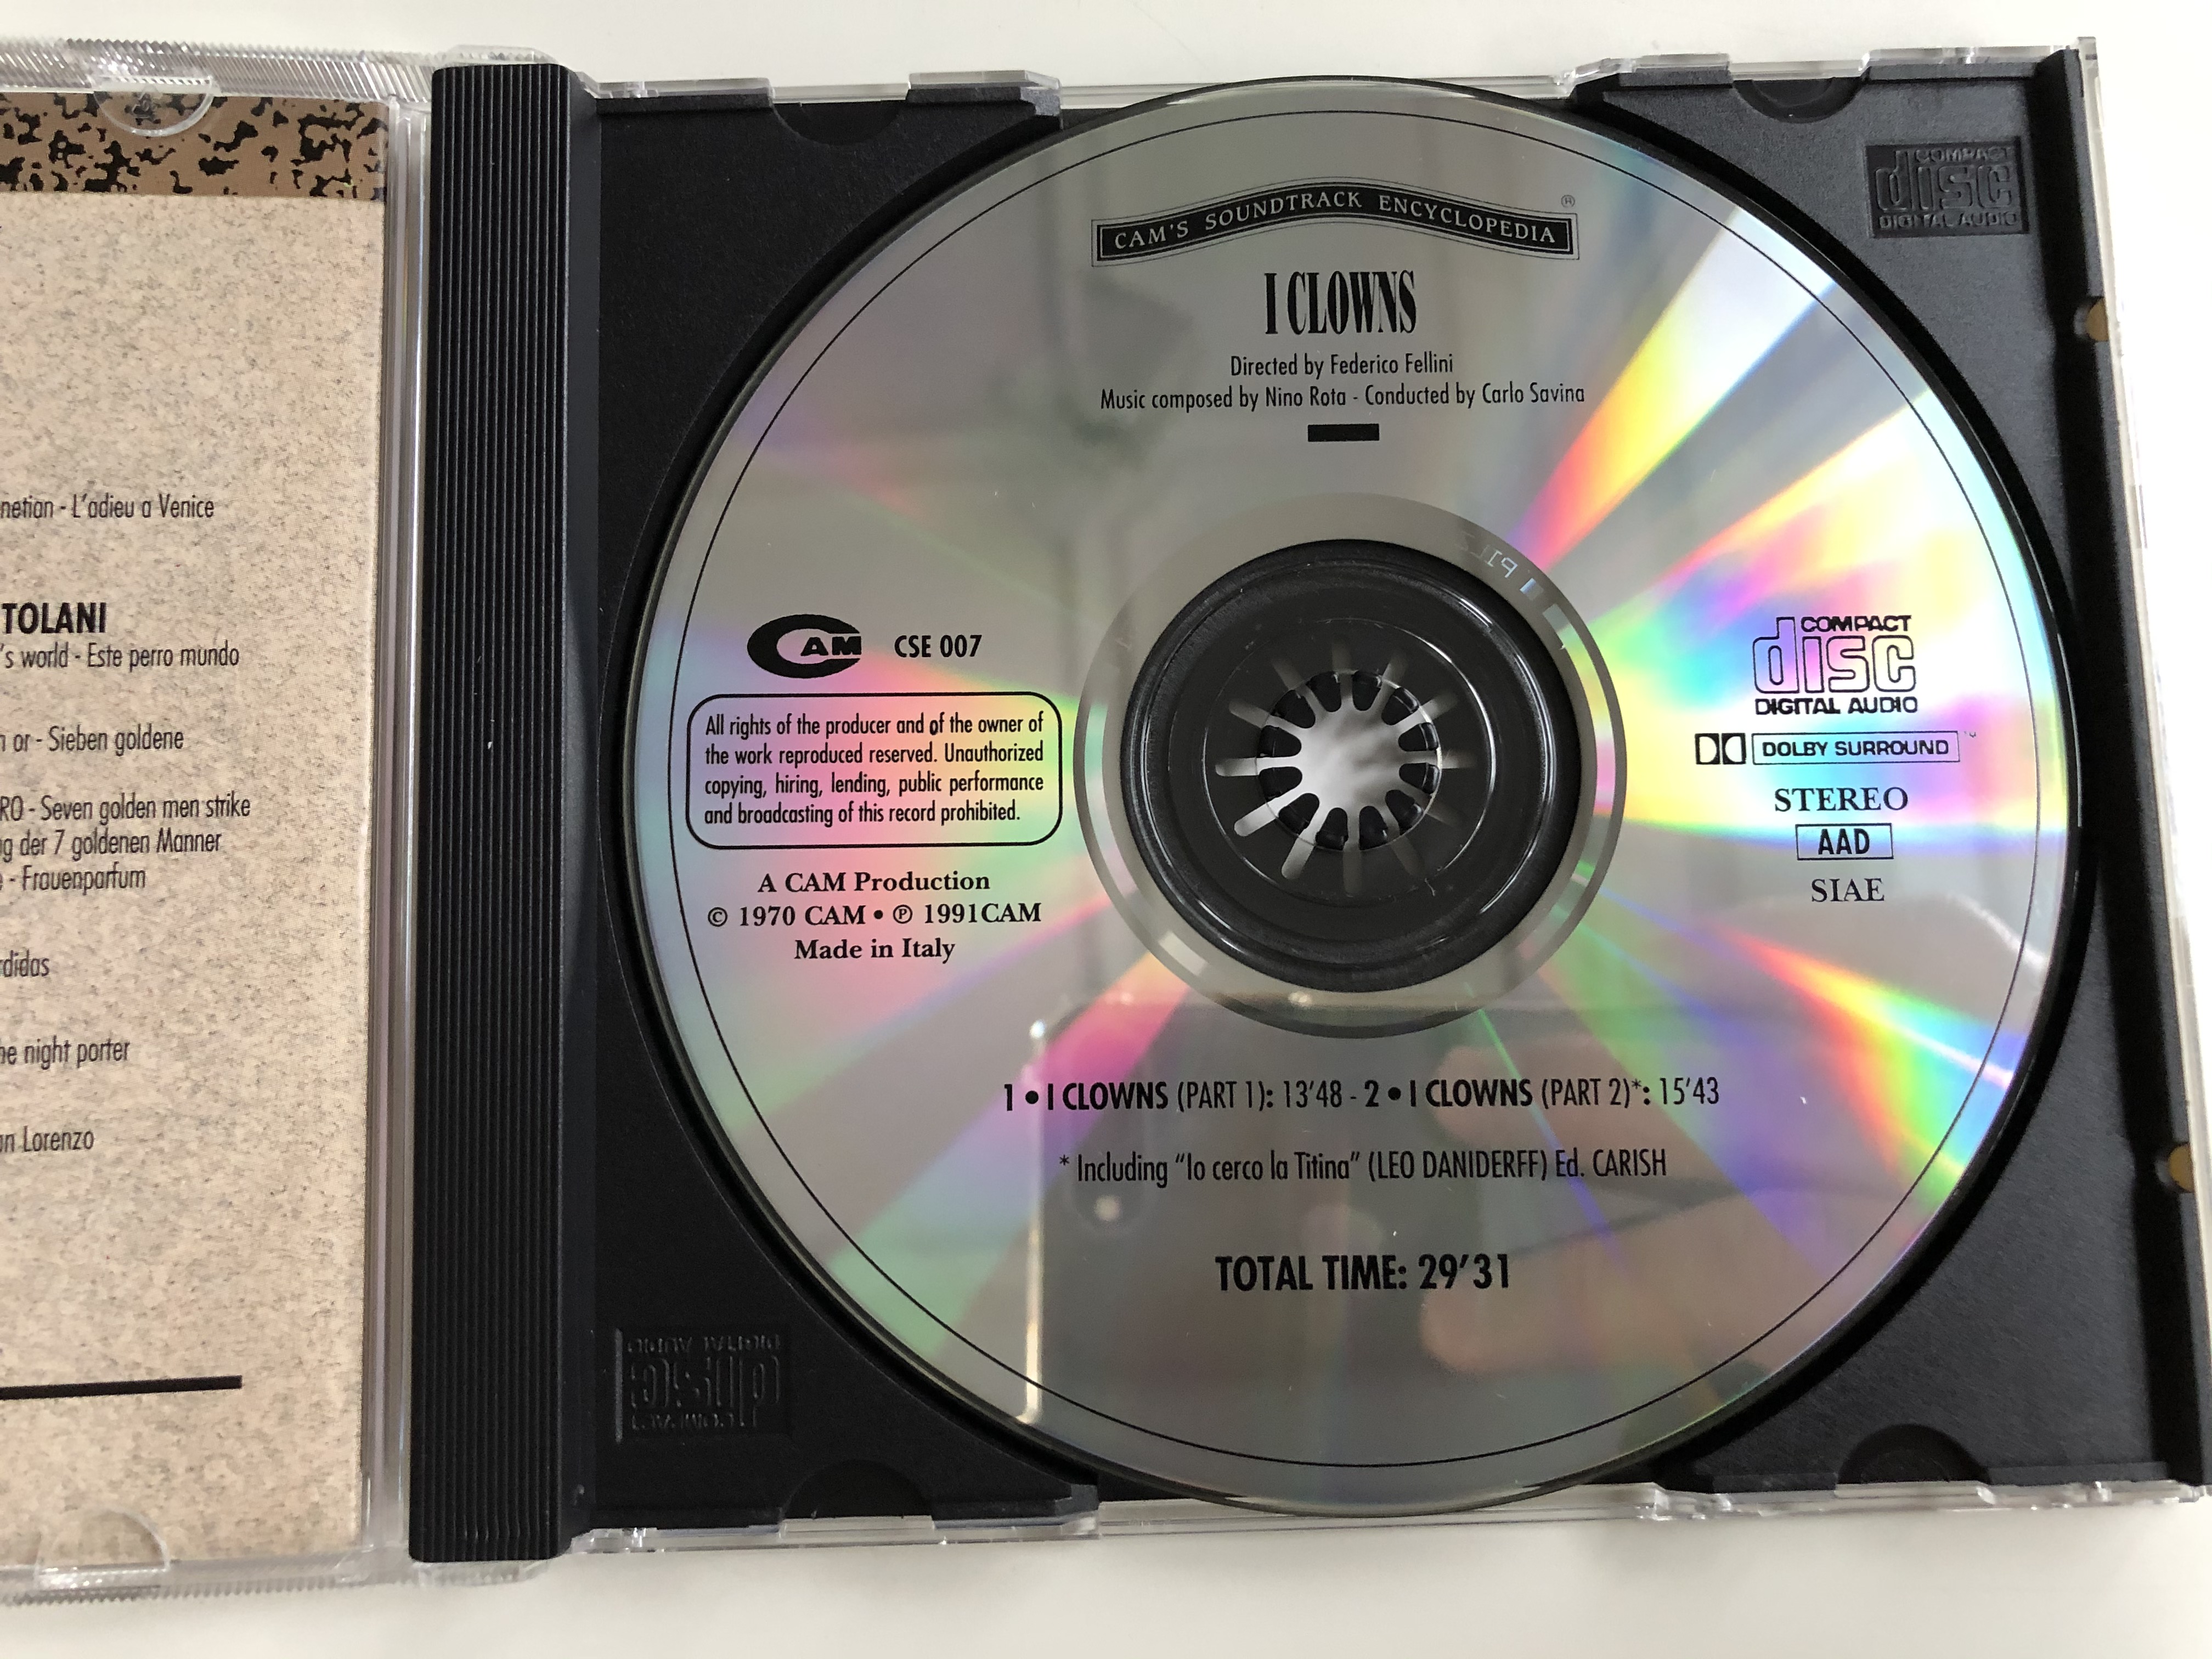 cam-s-soundtrack-encyclopedia-il-bidone-directed-by-federico-fellini-music-composed-by-nino-rota-cam-audio-cd-1991-stereo-cse-004-3-.jpg